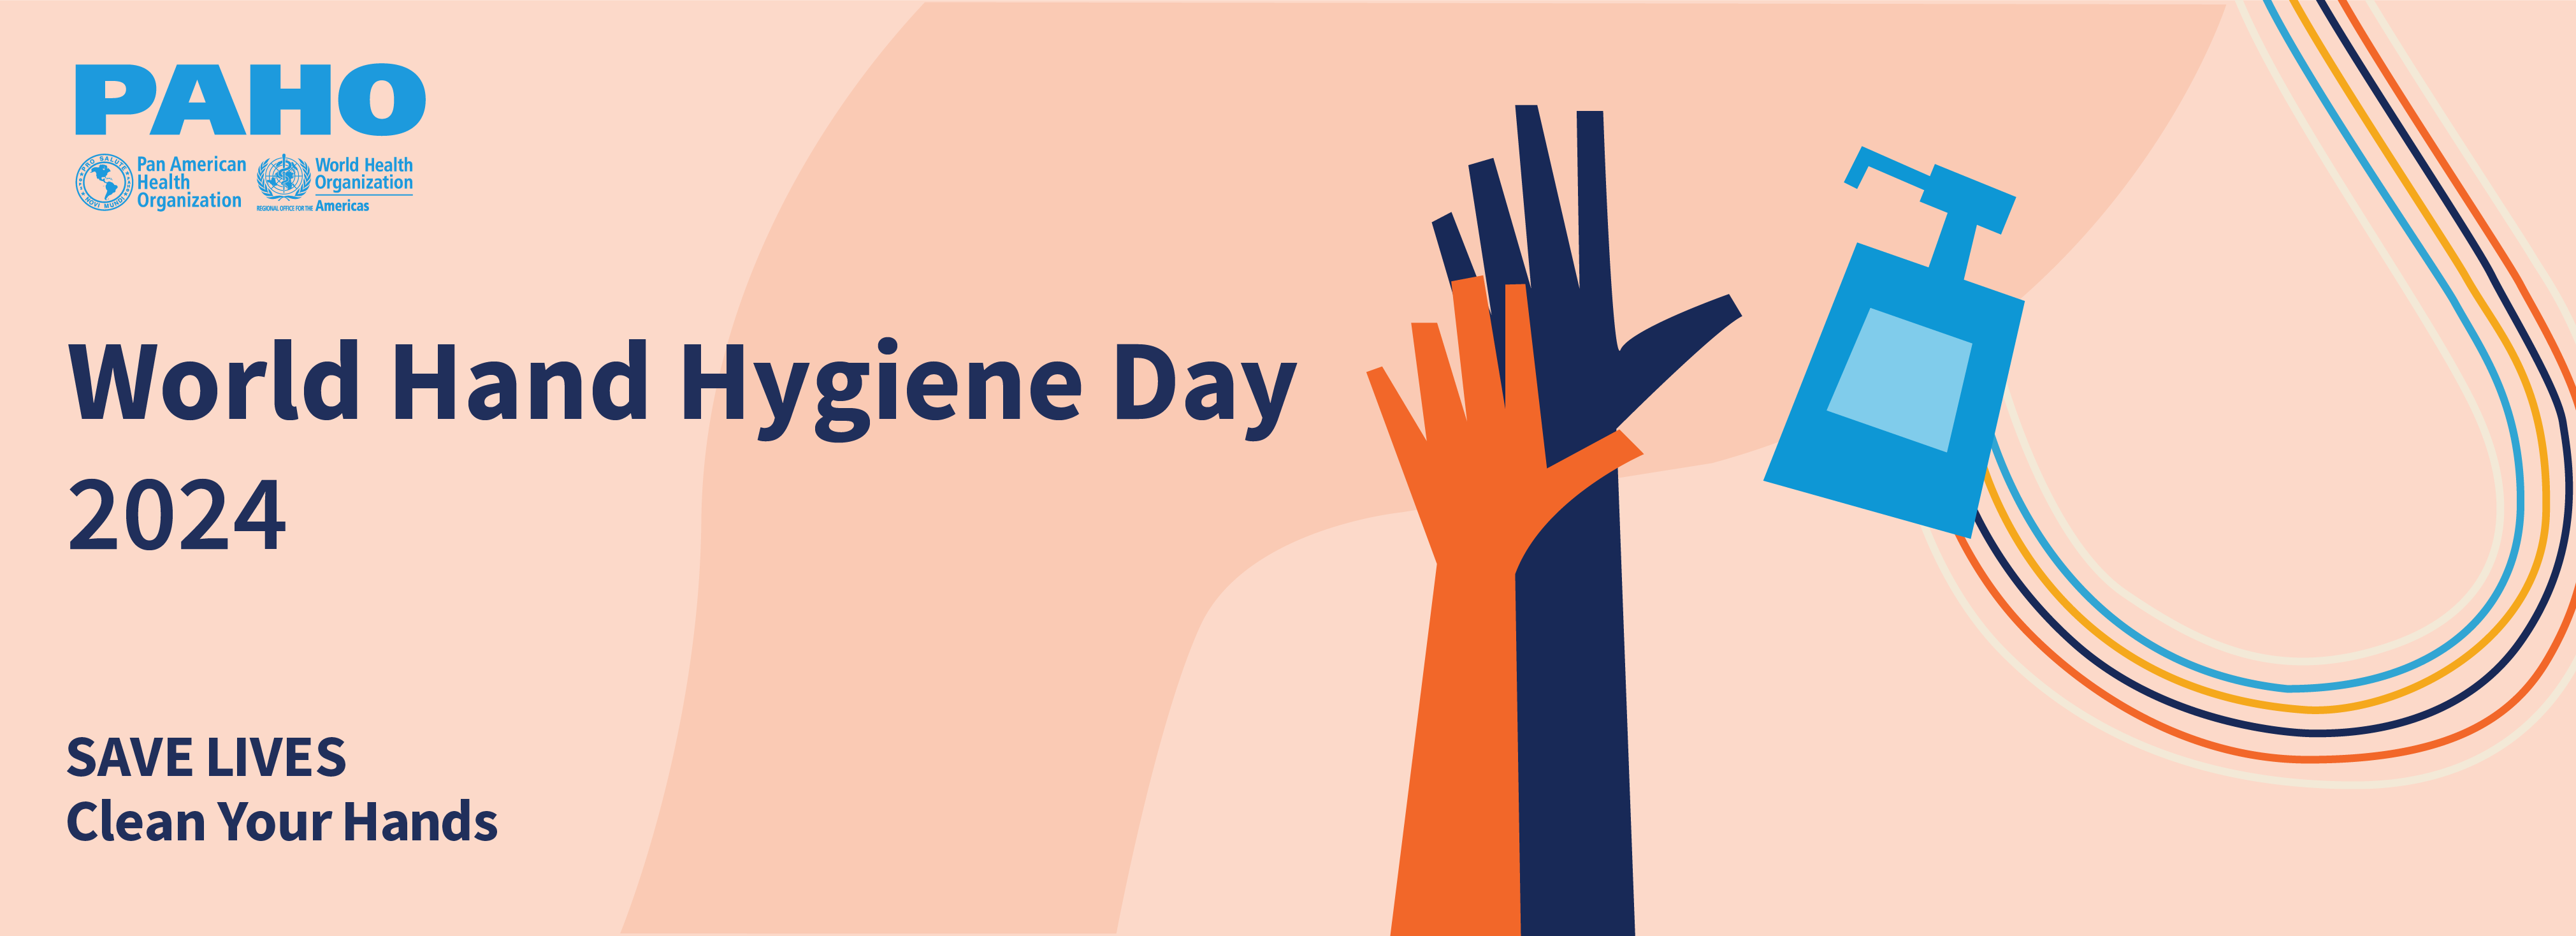 2024-cde-hygiene-banner-day-4042x-en.png